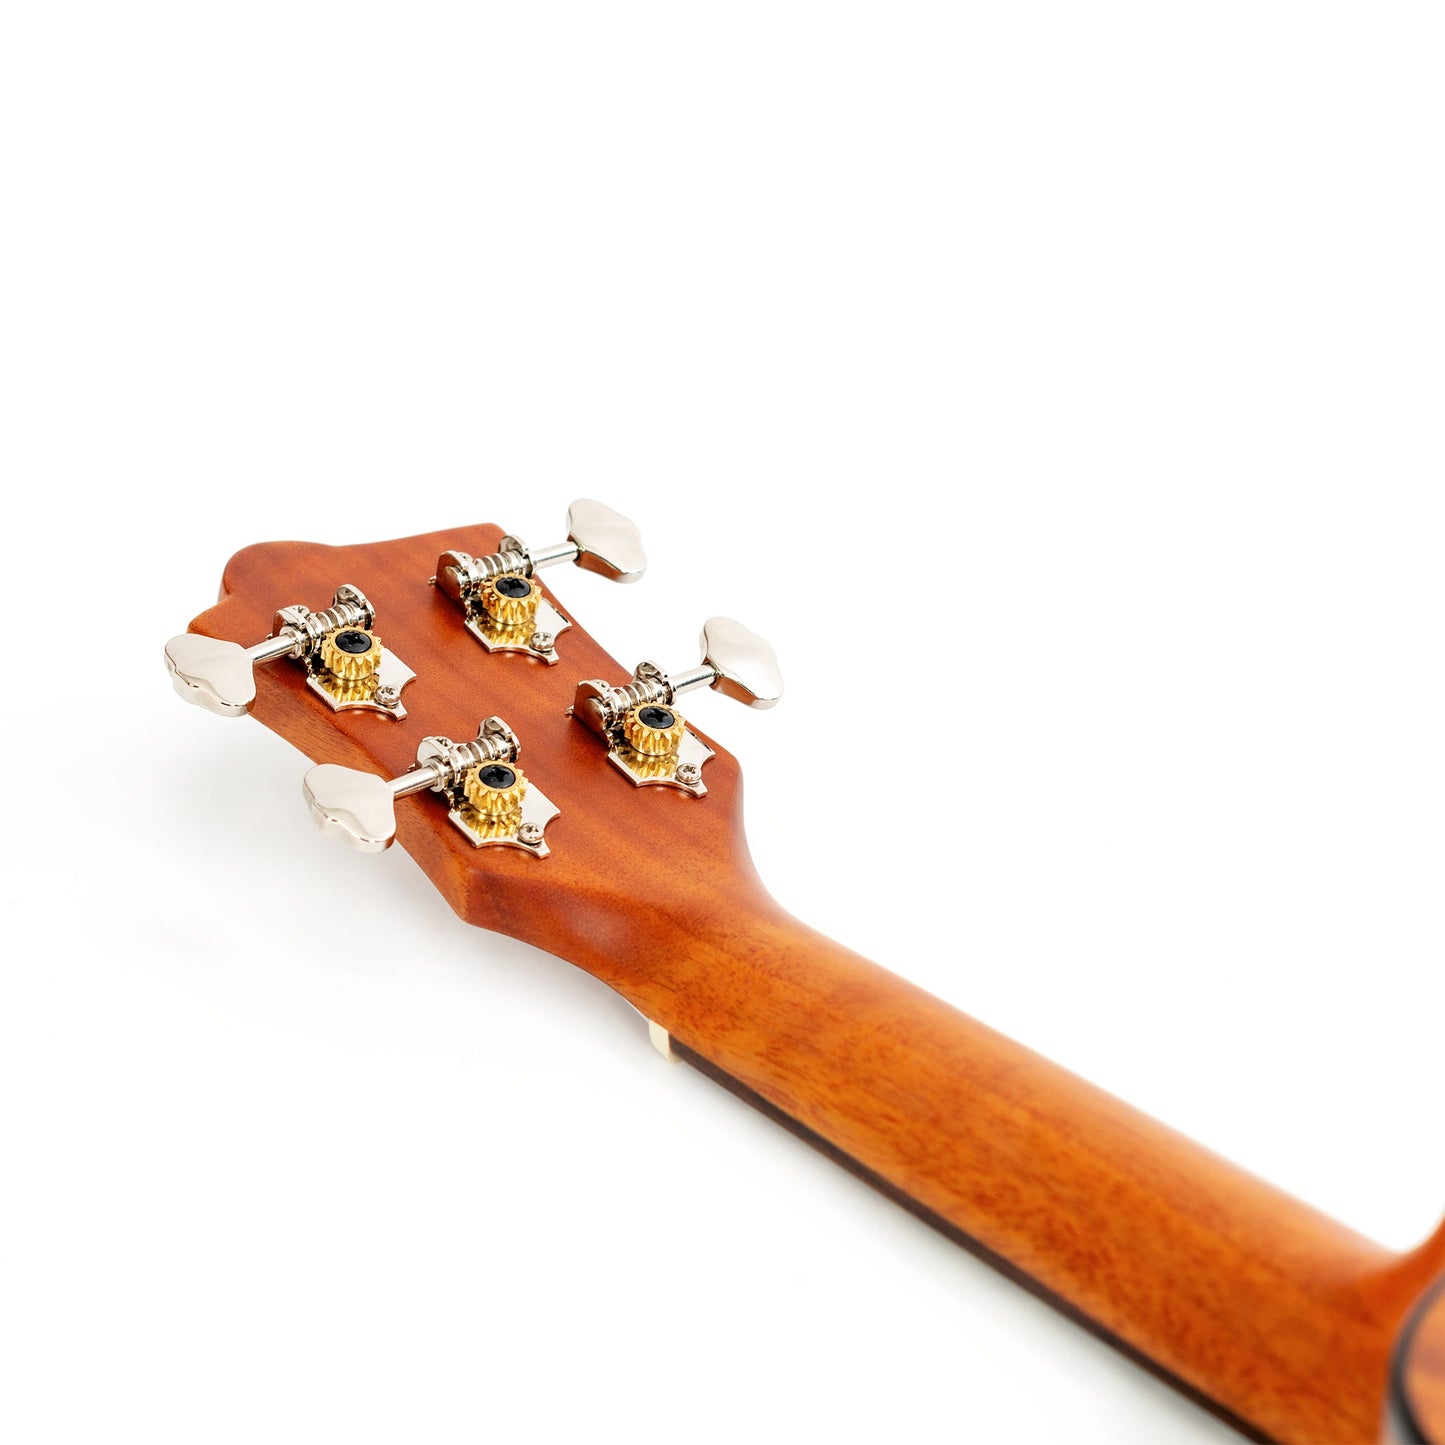 Octopus UK480S Soprano ukulele – All solid mahogany